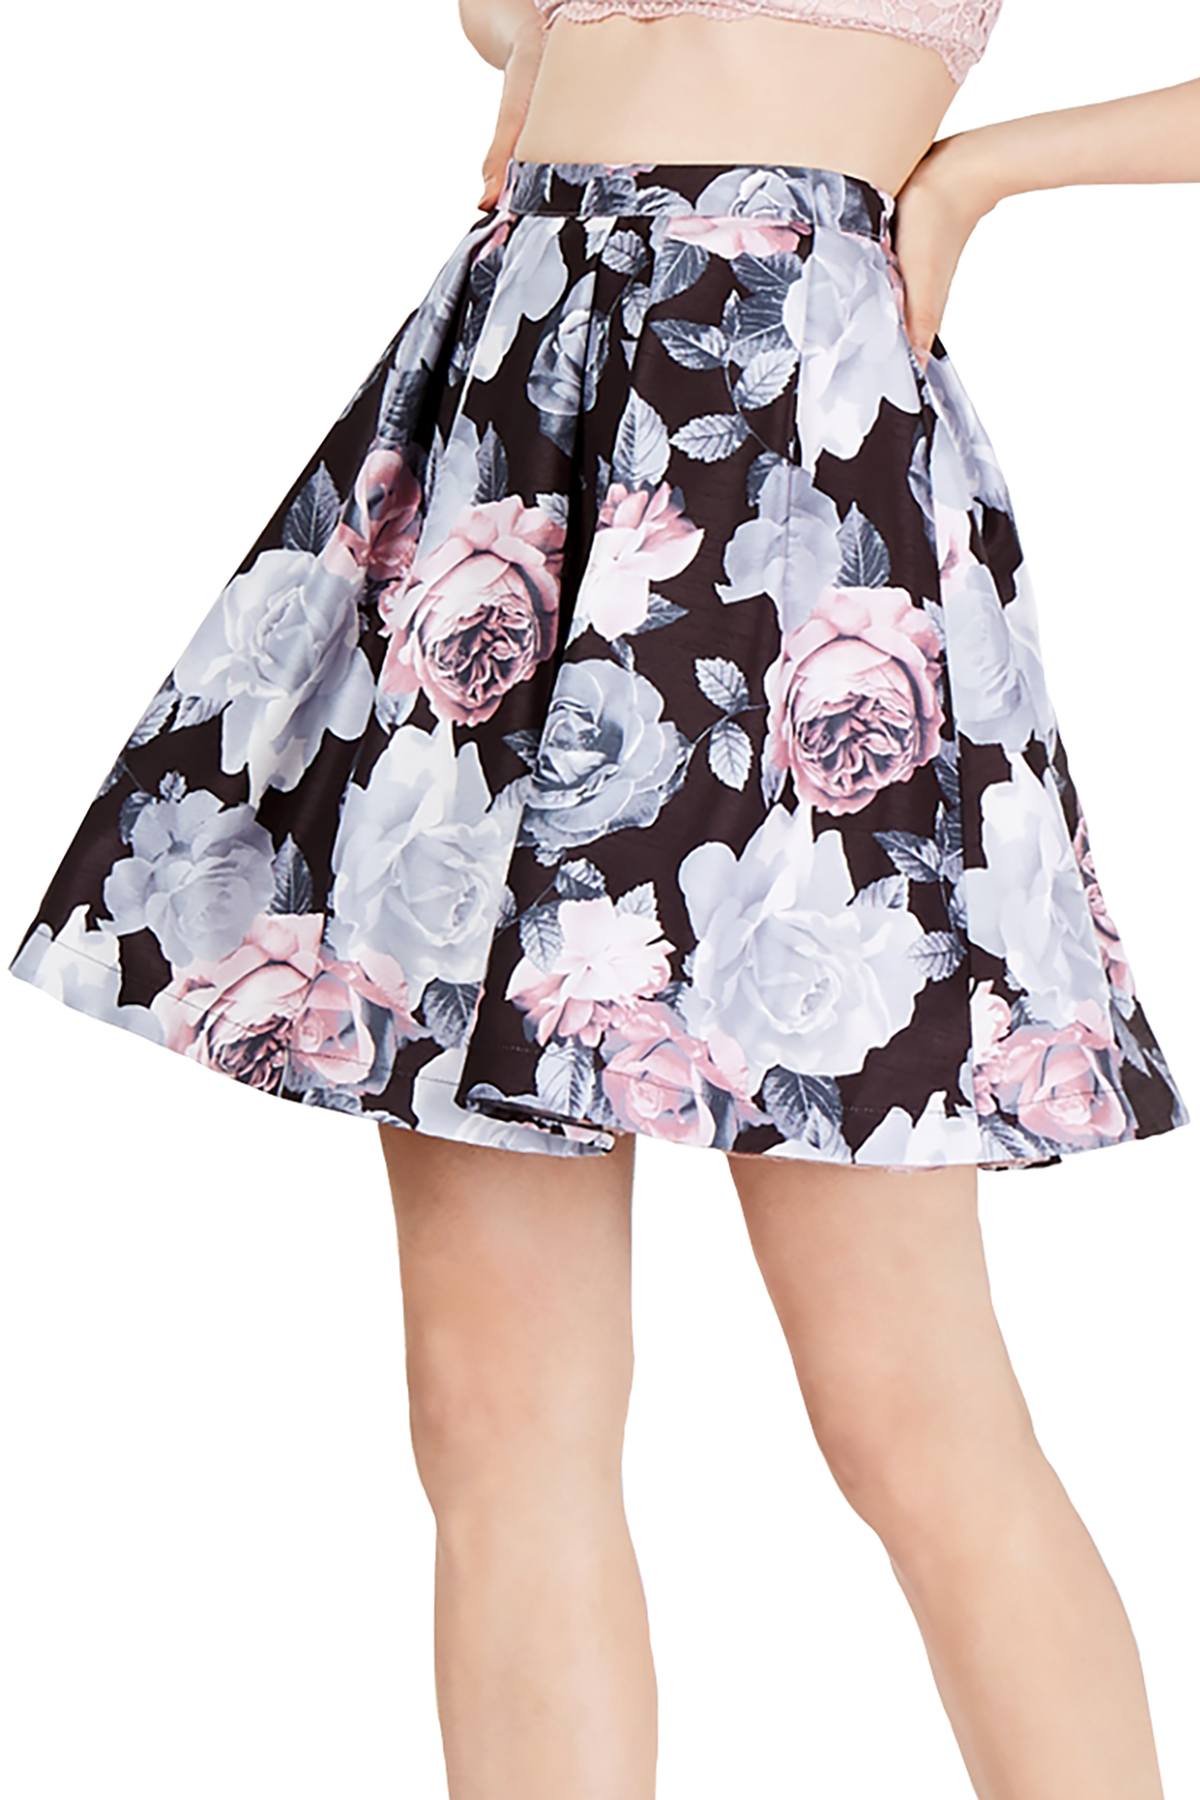 Sequin Hearts Black Floral Juniors Flare Skirt | CheapUndies